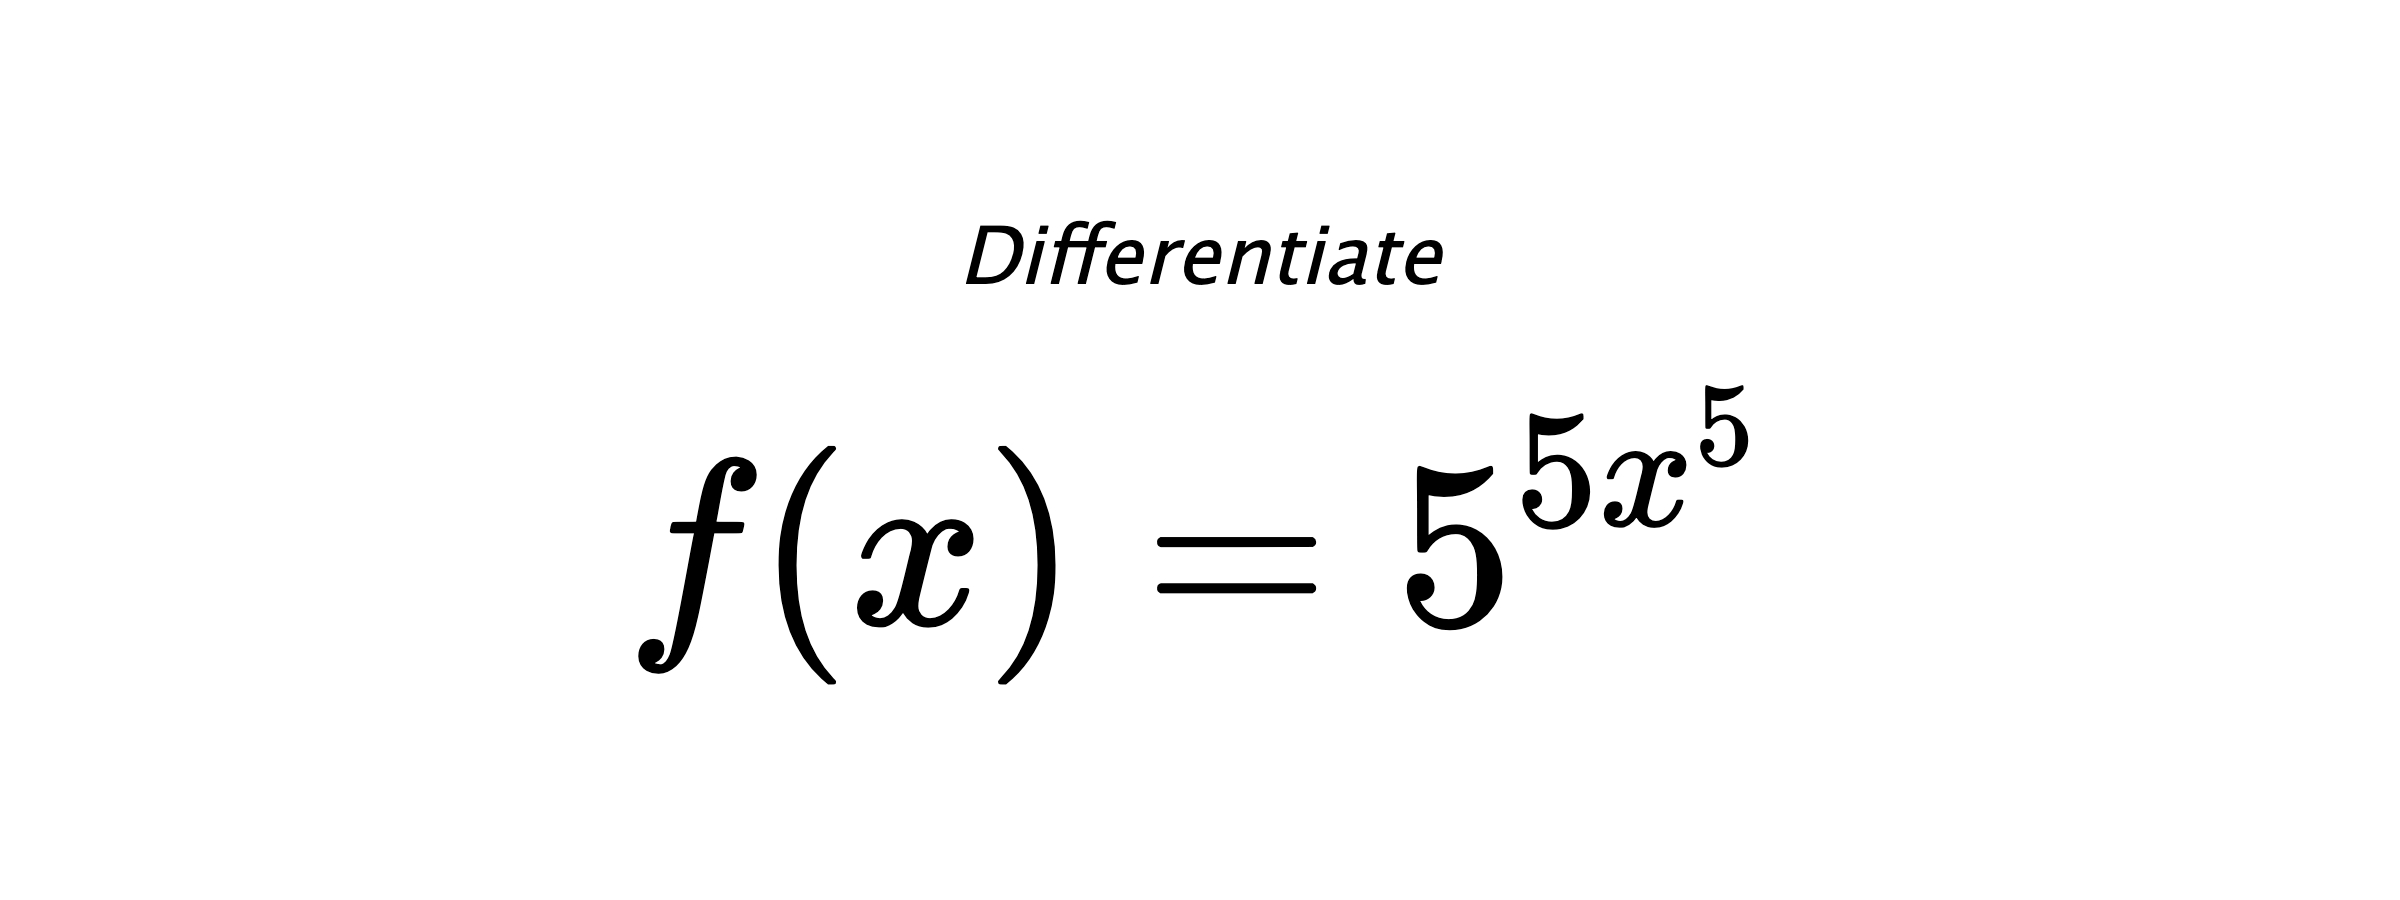 Differentiate $ f(x) = 5^{5 x^{5}} $